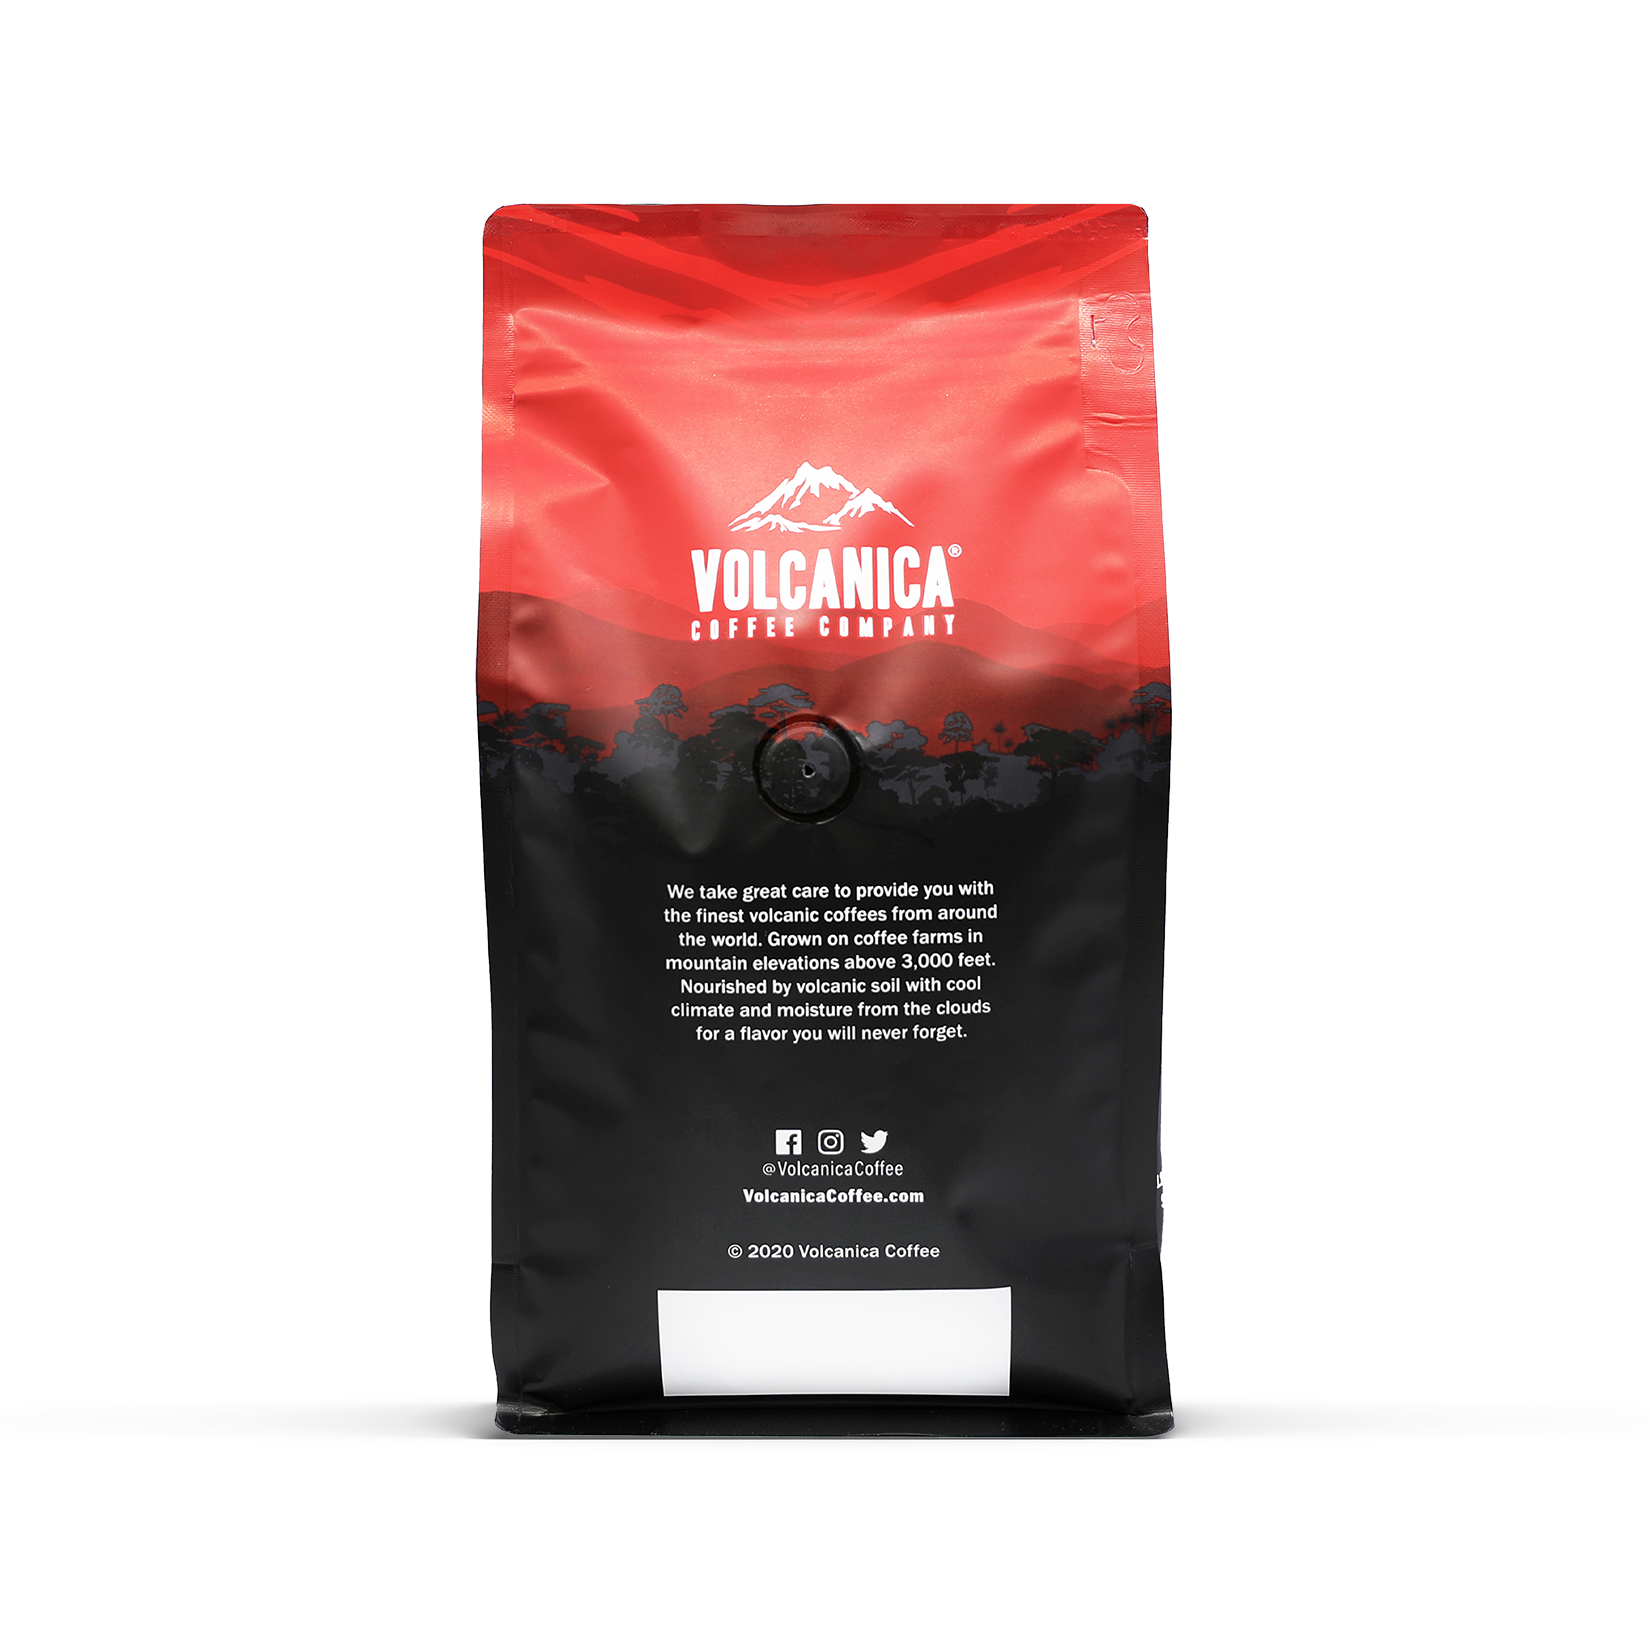 Caramel Crunch Flavored Coffee - Volcanica Coffee